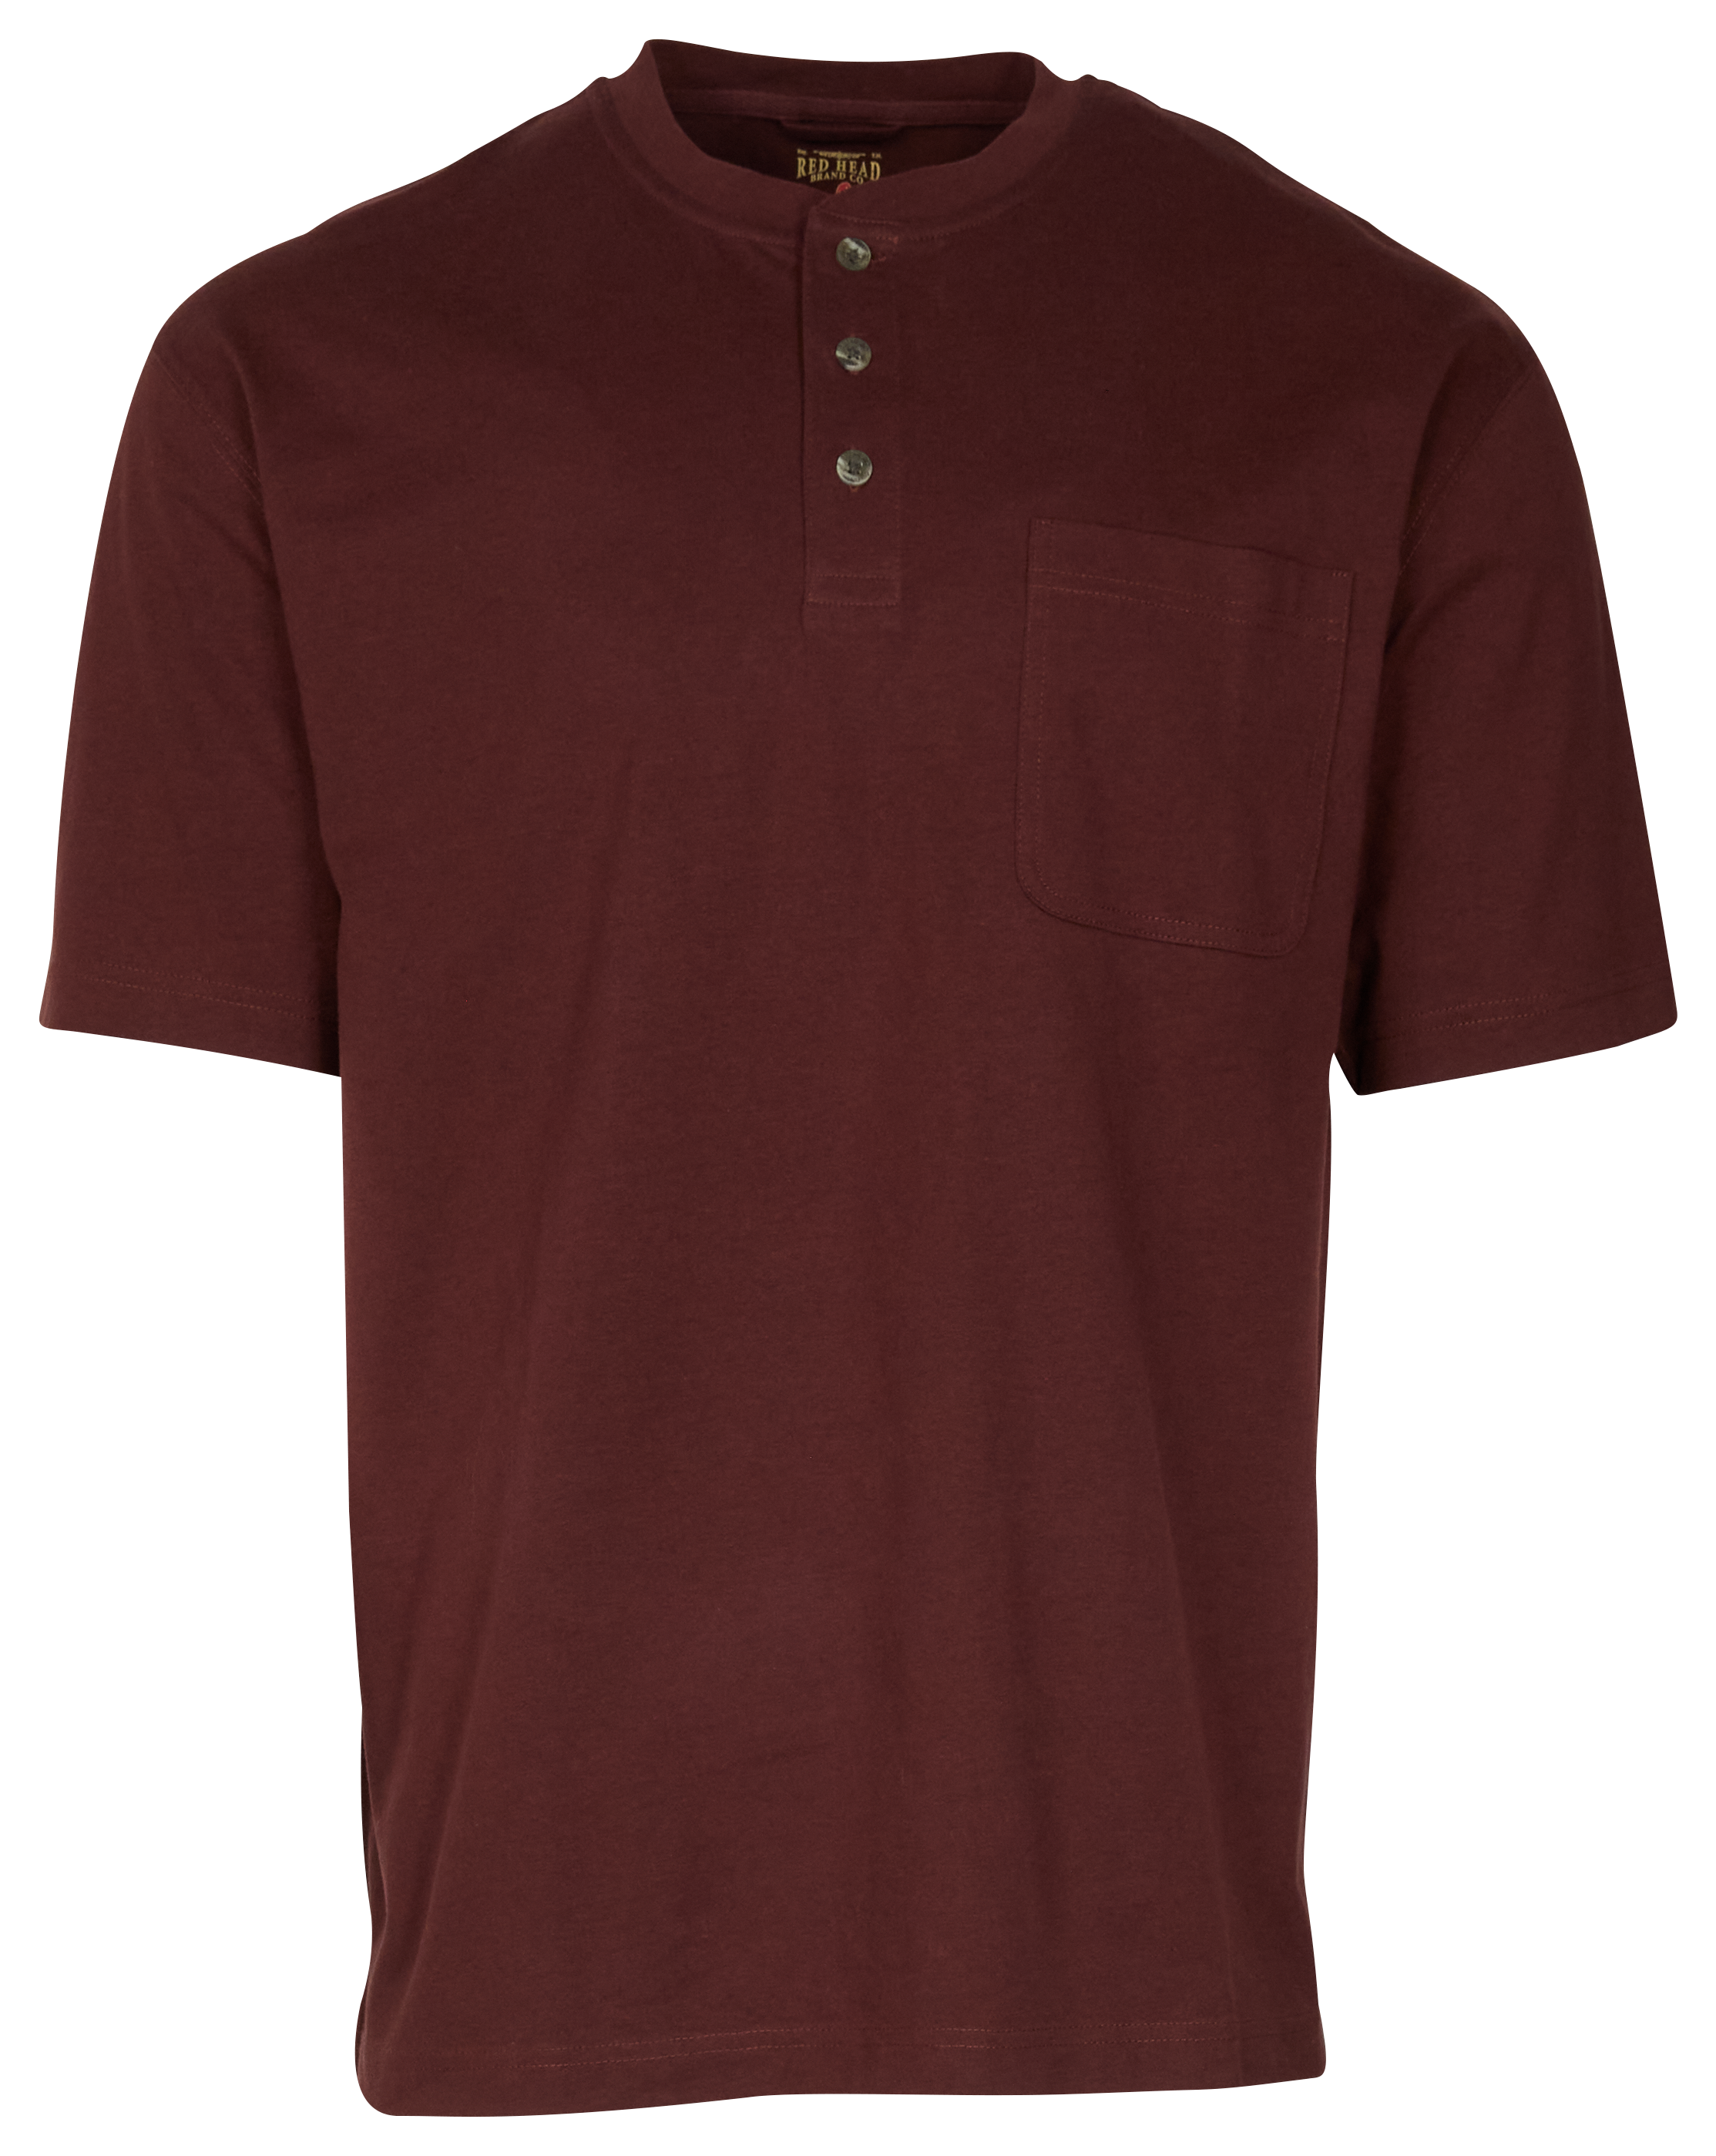 RedHead Henley Pocket Short-Sleeve Shirt for Men - Wine Heather - S